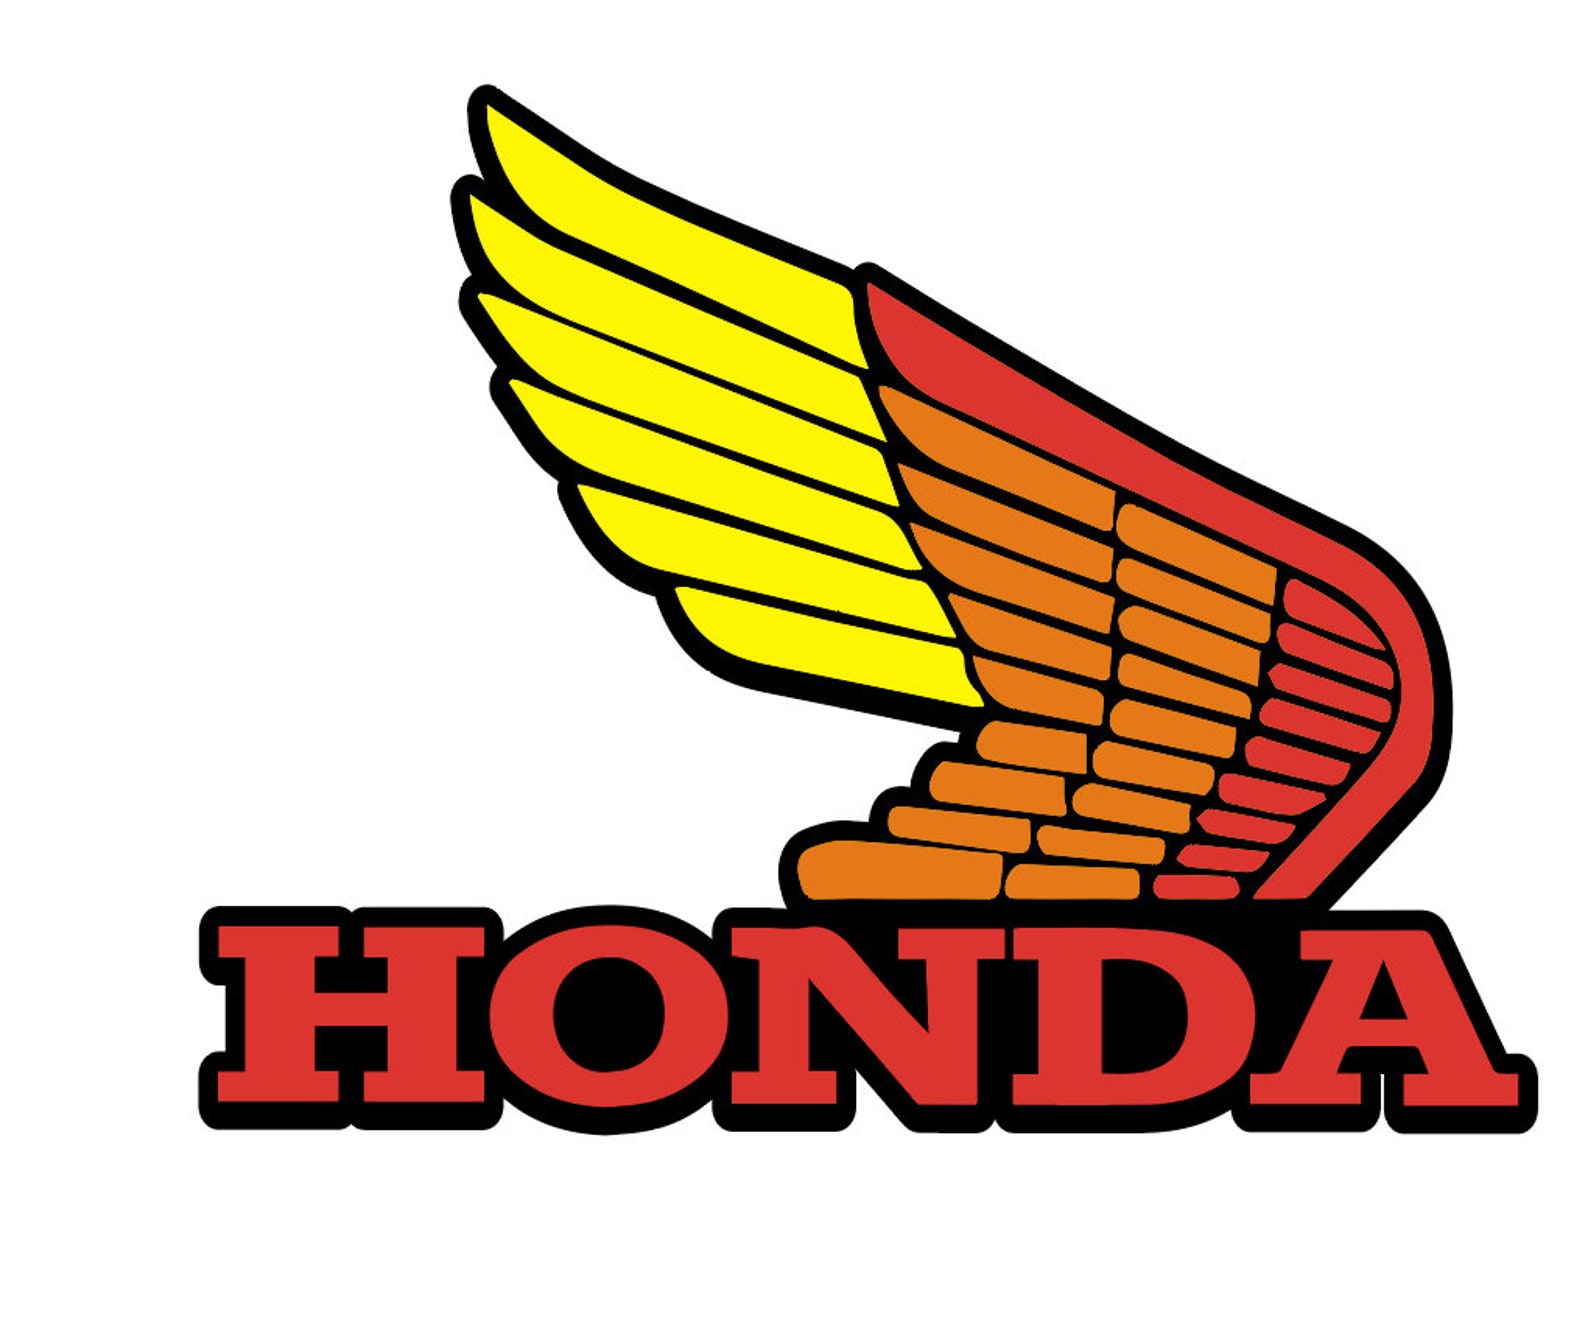 Honda atc 200x gas tank decal set 84-85 model year | Etsy